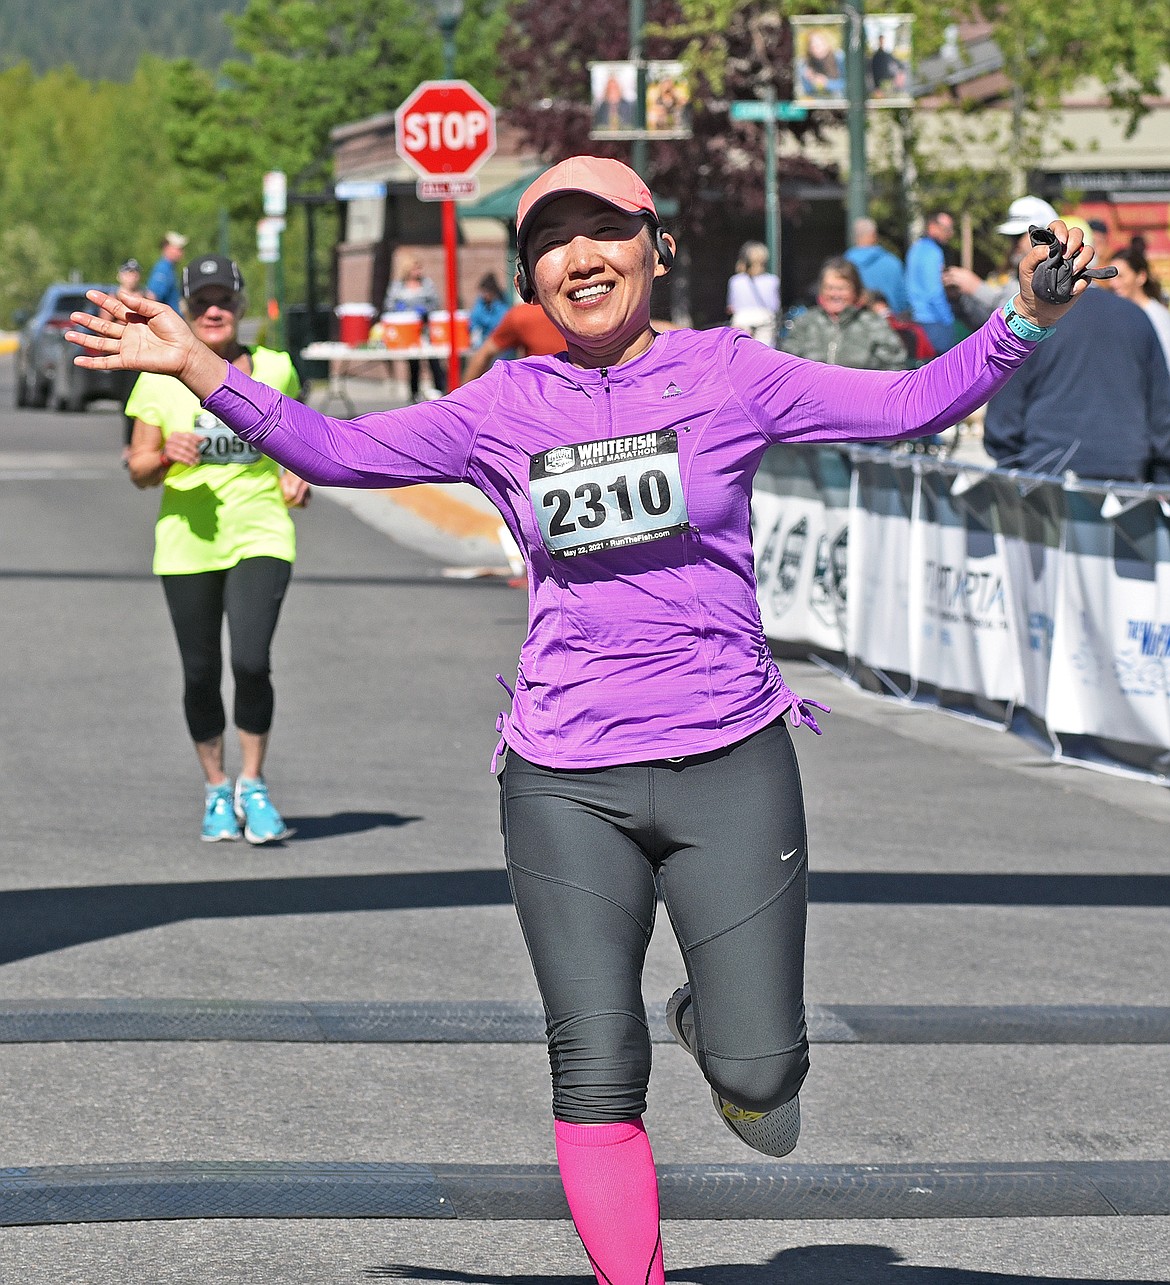 Hyojin Meadows of Spokane, Washington celebrates as she runs through the finish line of the Whitefish half marathon event on Saturday. (Whitney England/Whitefish Pilot)